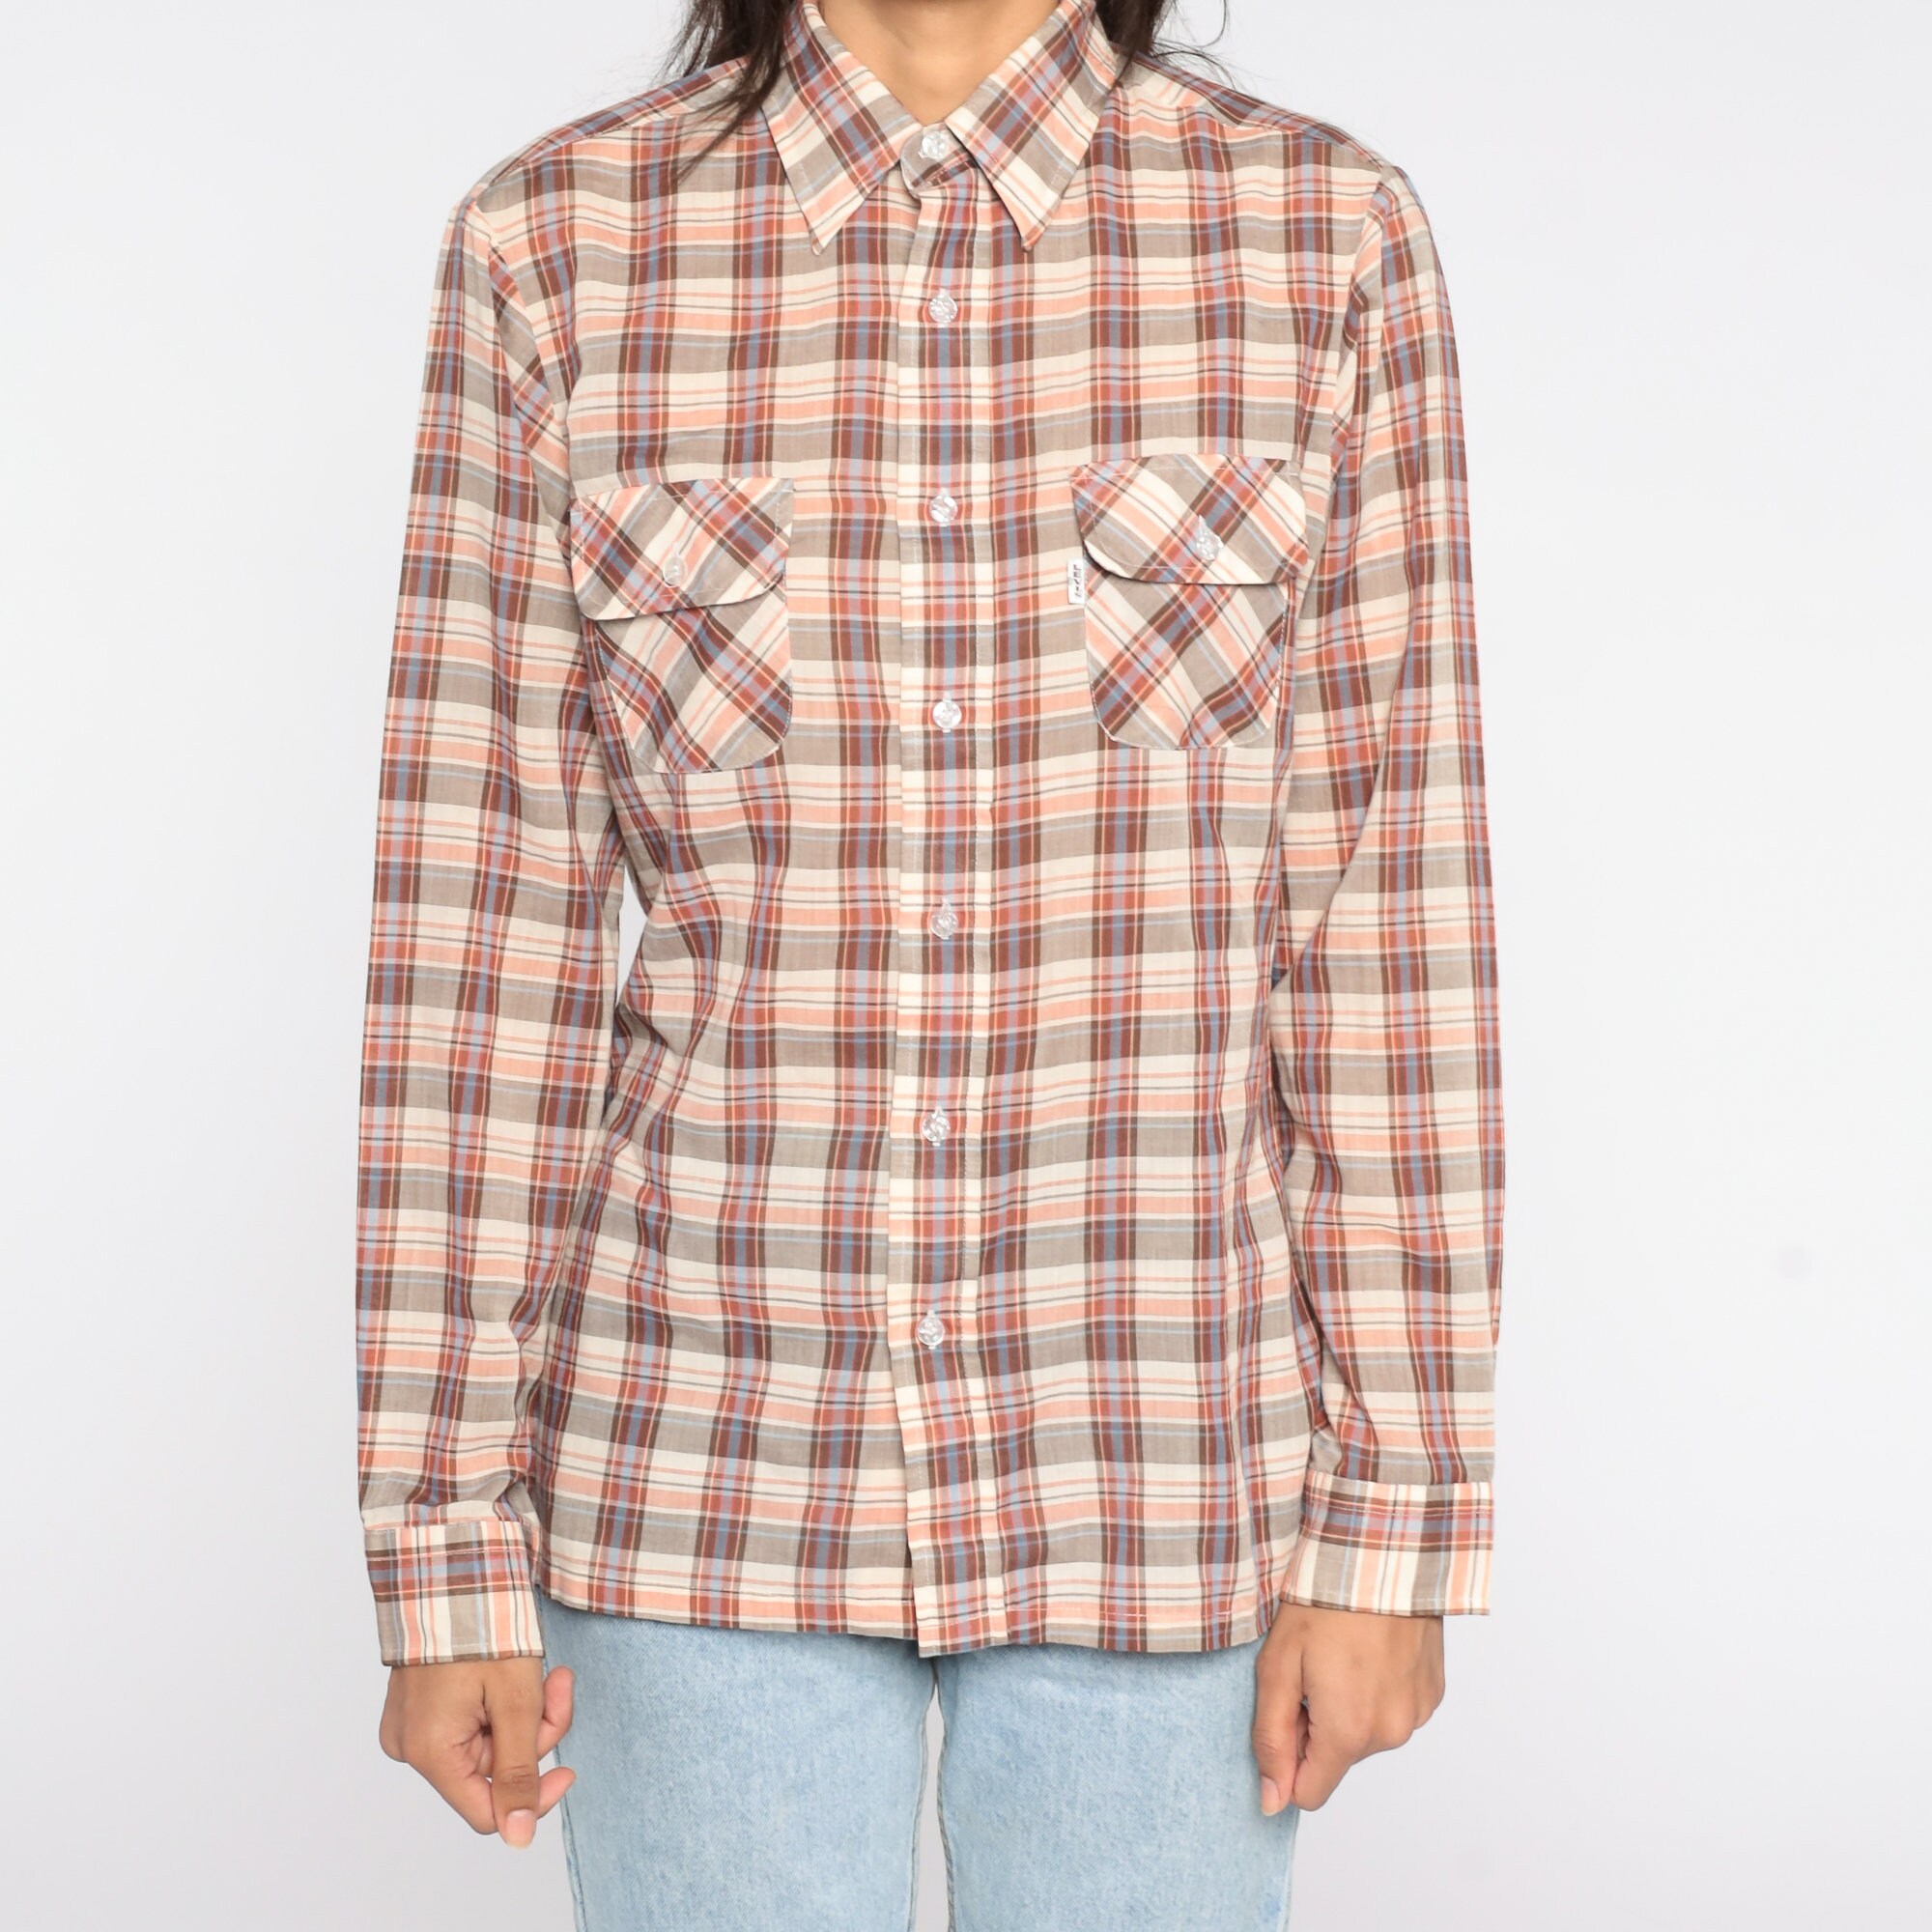 Plaid Levis Shirt 80s Button up Shirt Brown Checkered Shirt | Etsy